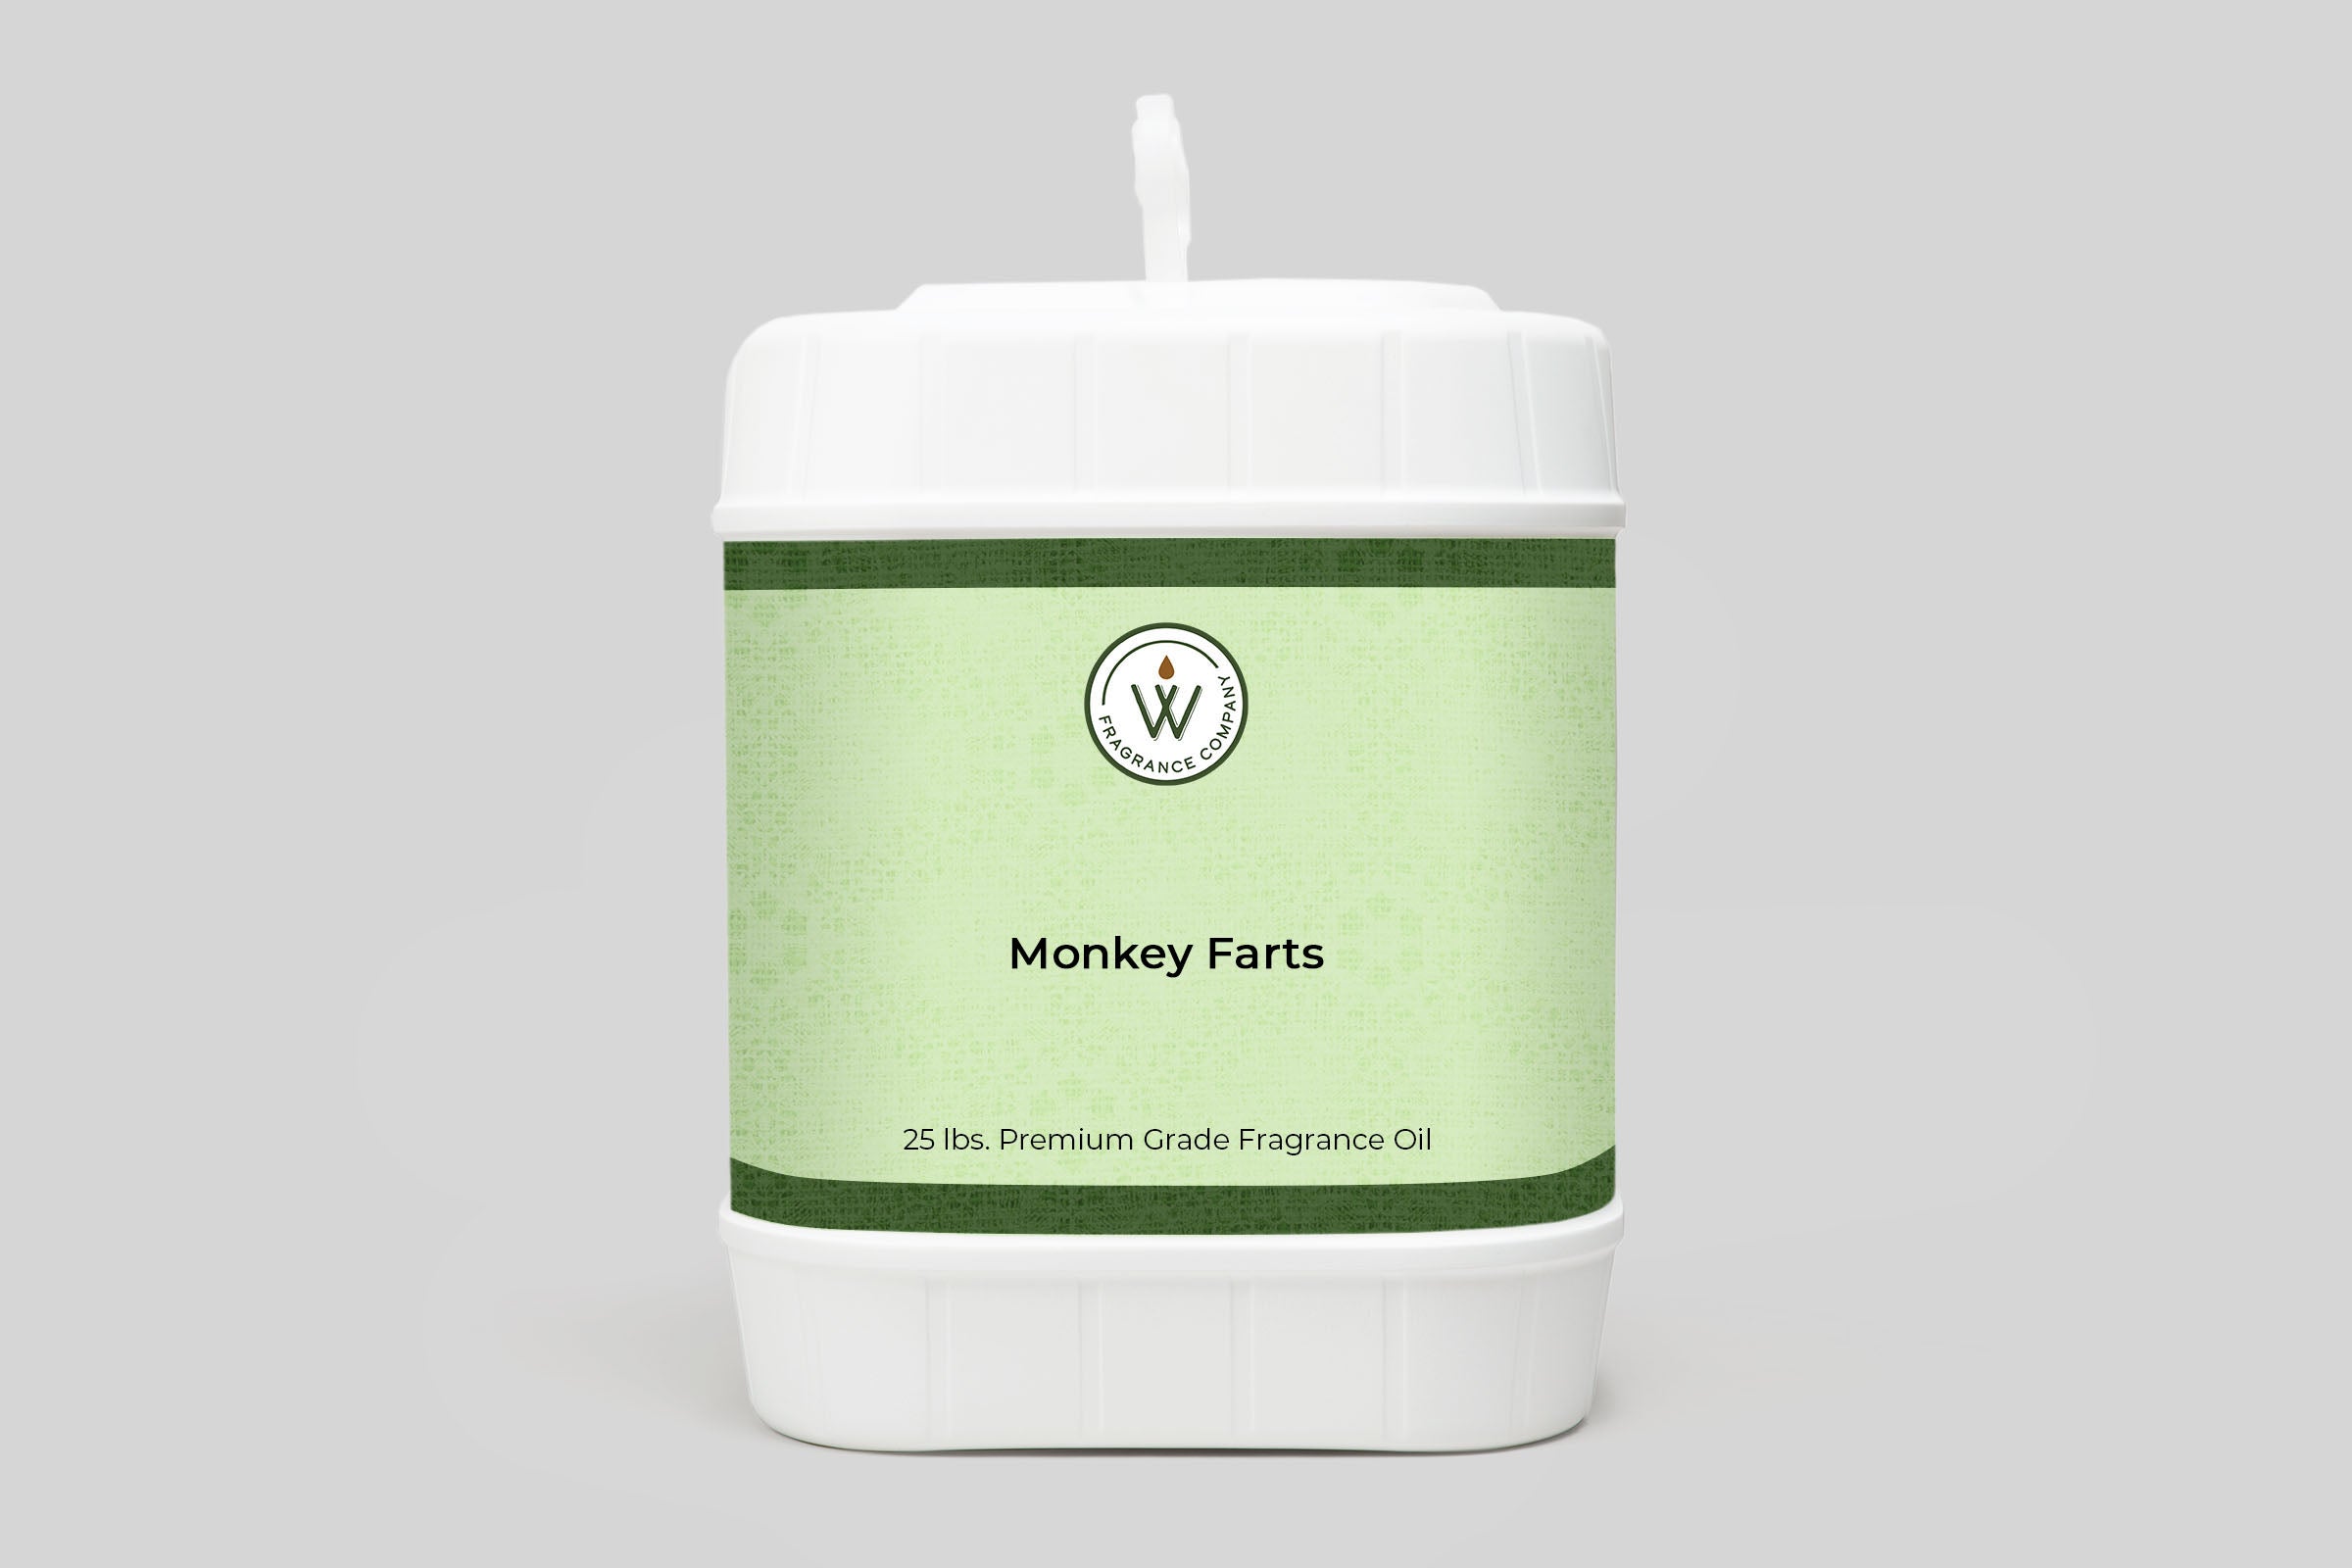 Monkey Farts Fragrance Oil